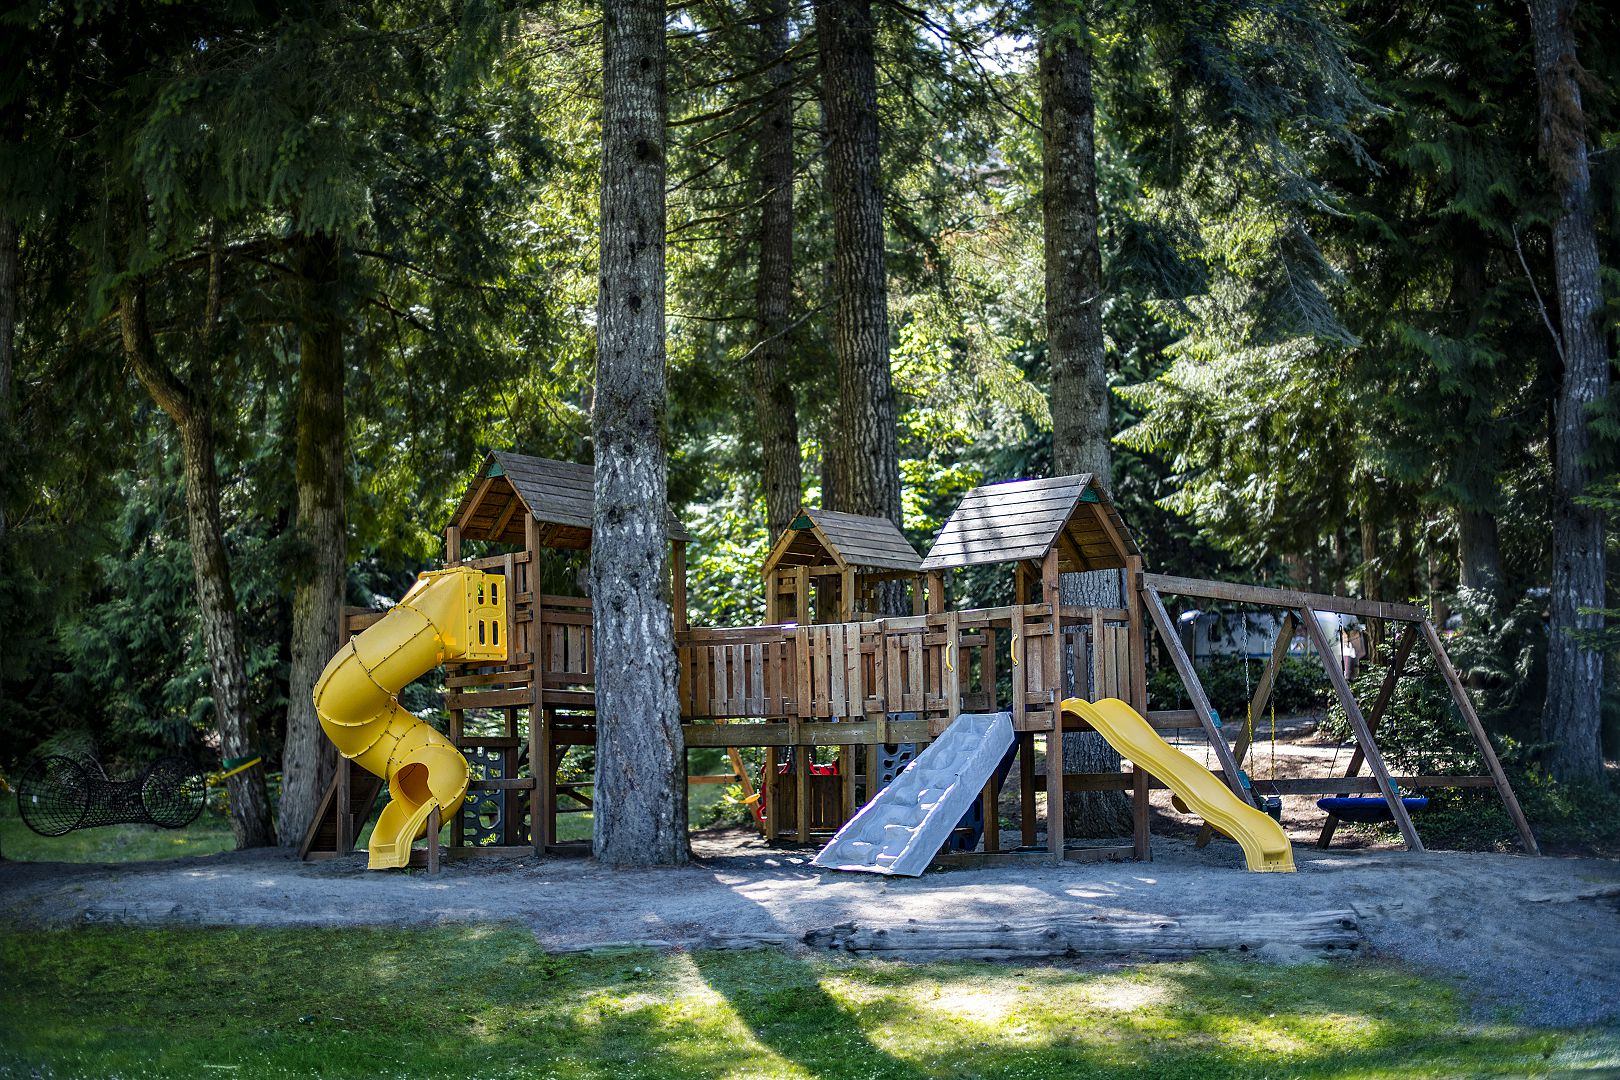 Vancouver Island Campground - Kids Playground